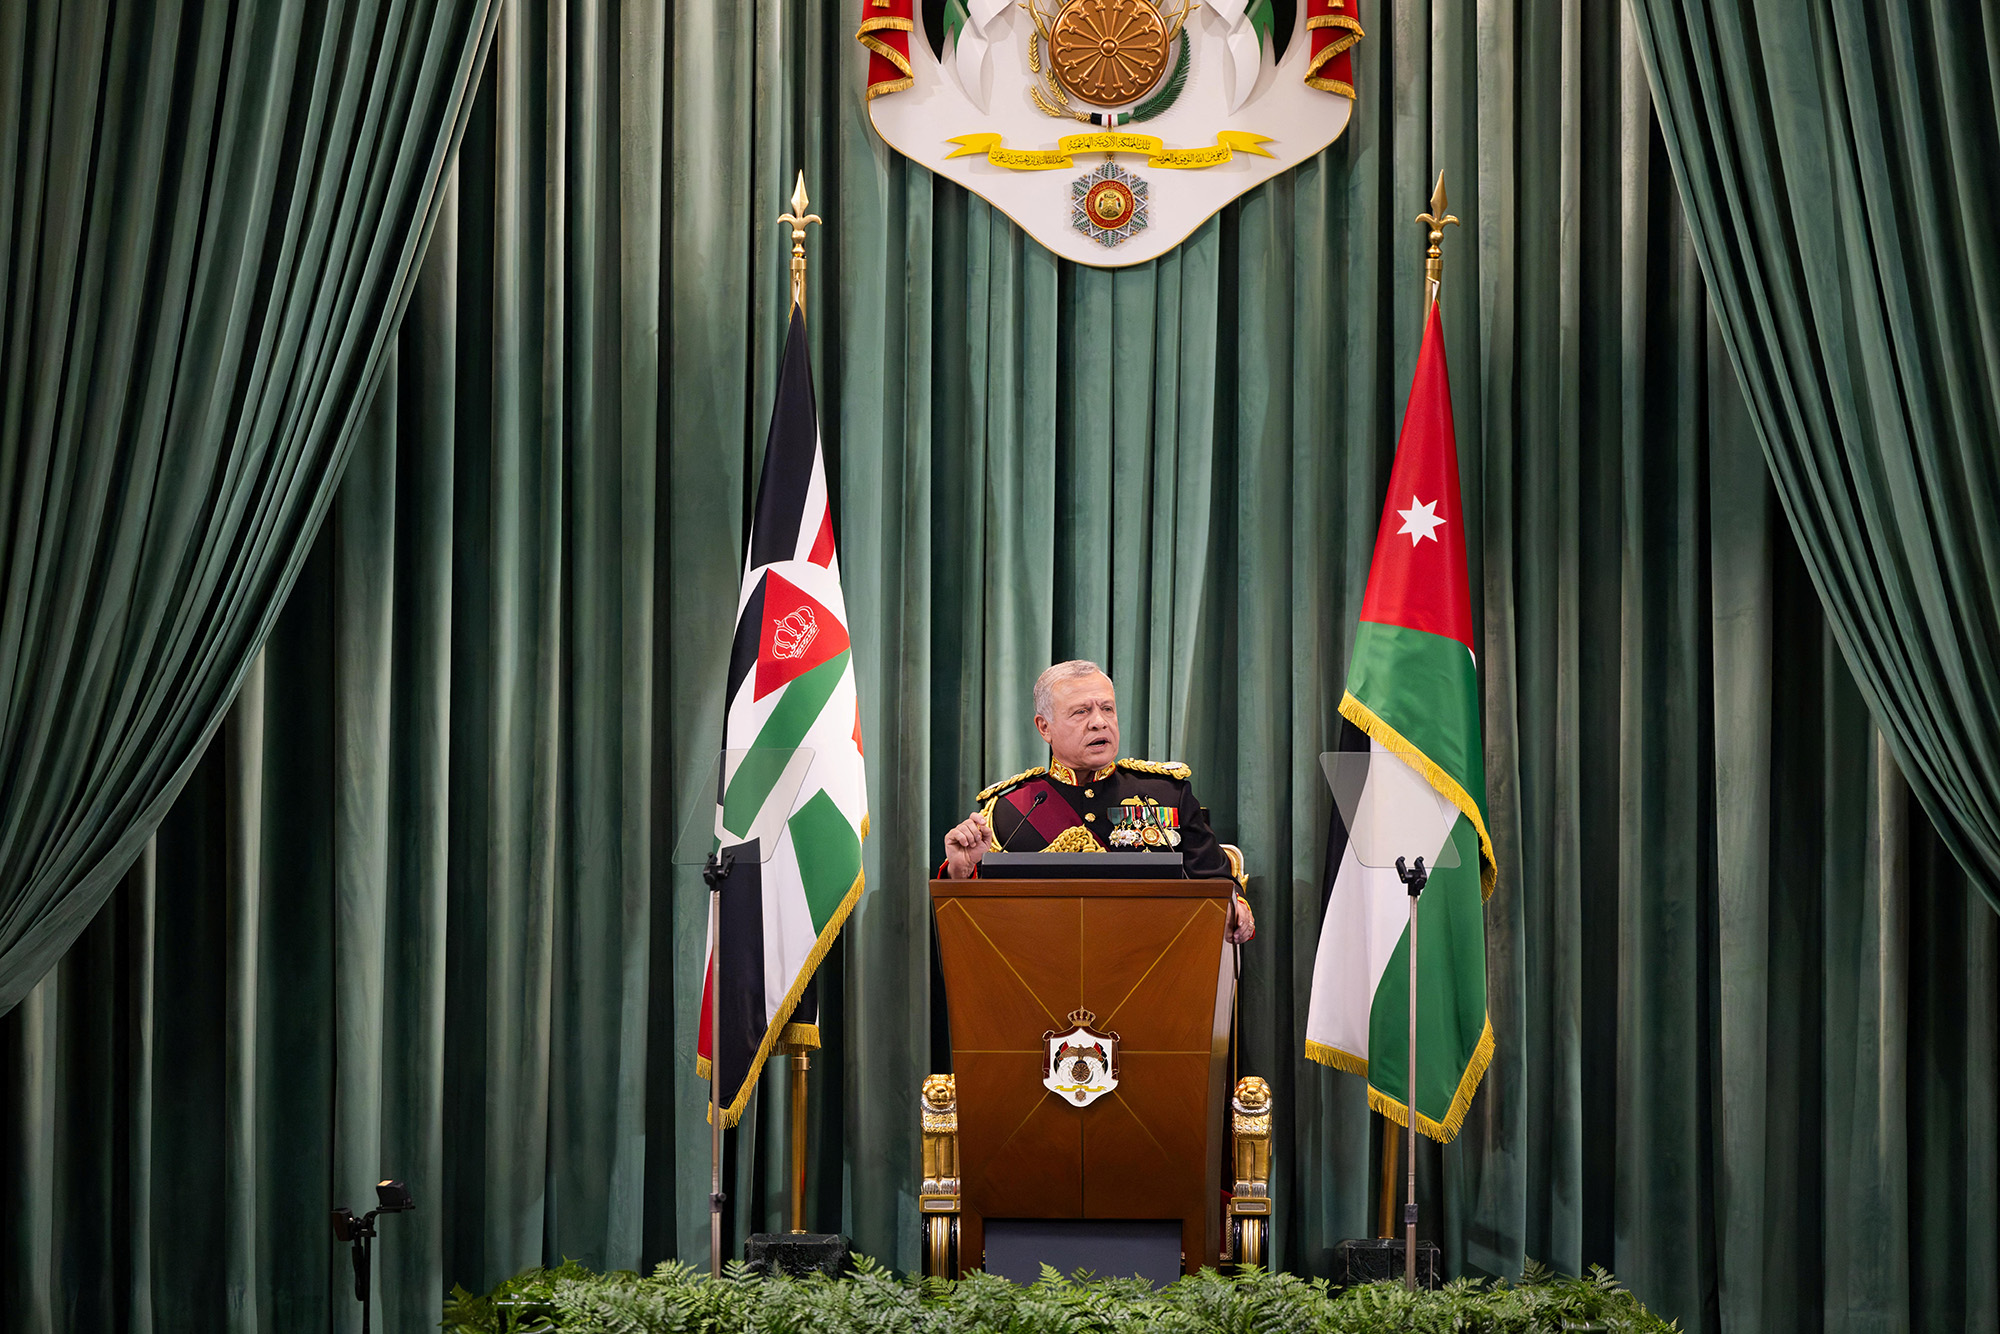 Jordan's King Abdullah II speaks at the opening of a new parliamentary session in Amman, Jordan, on October 11.